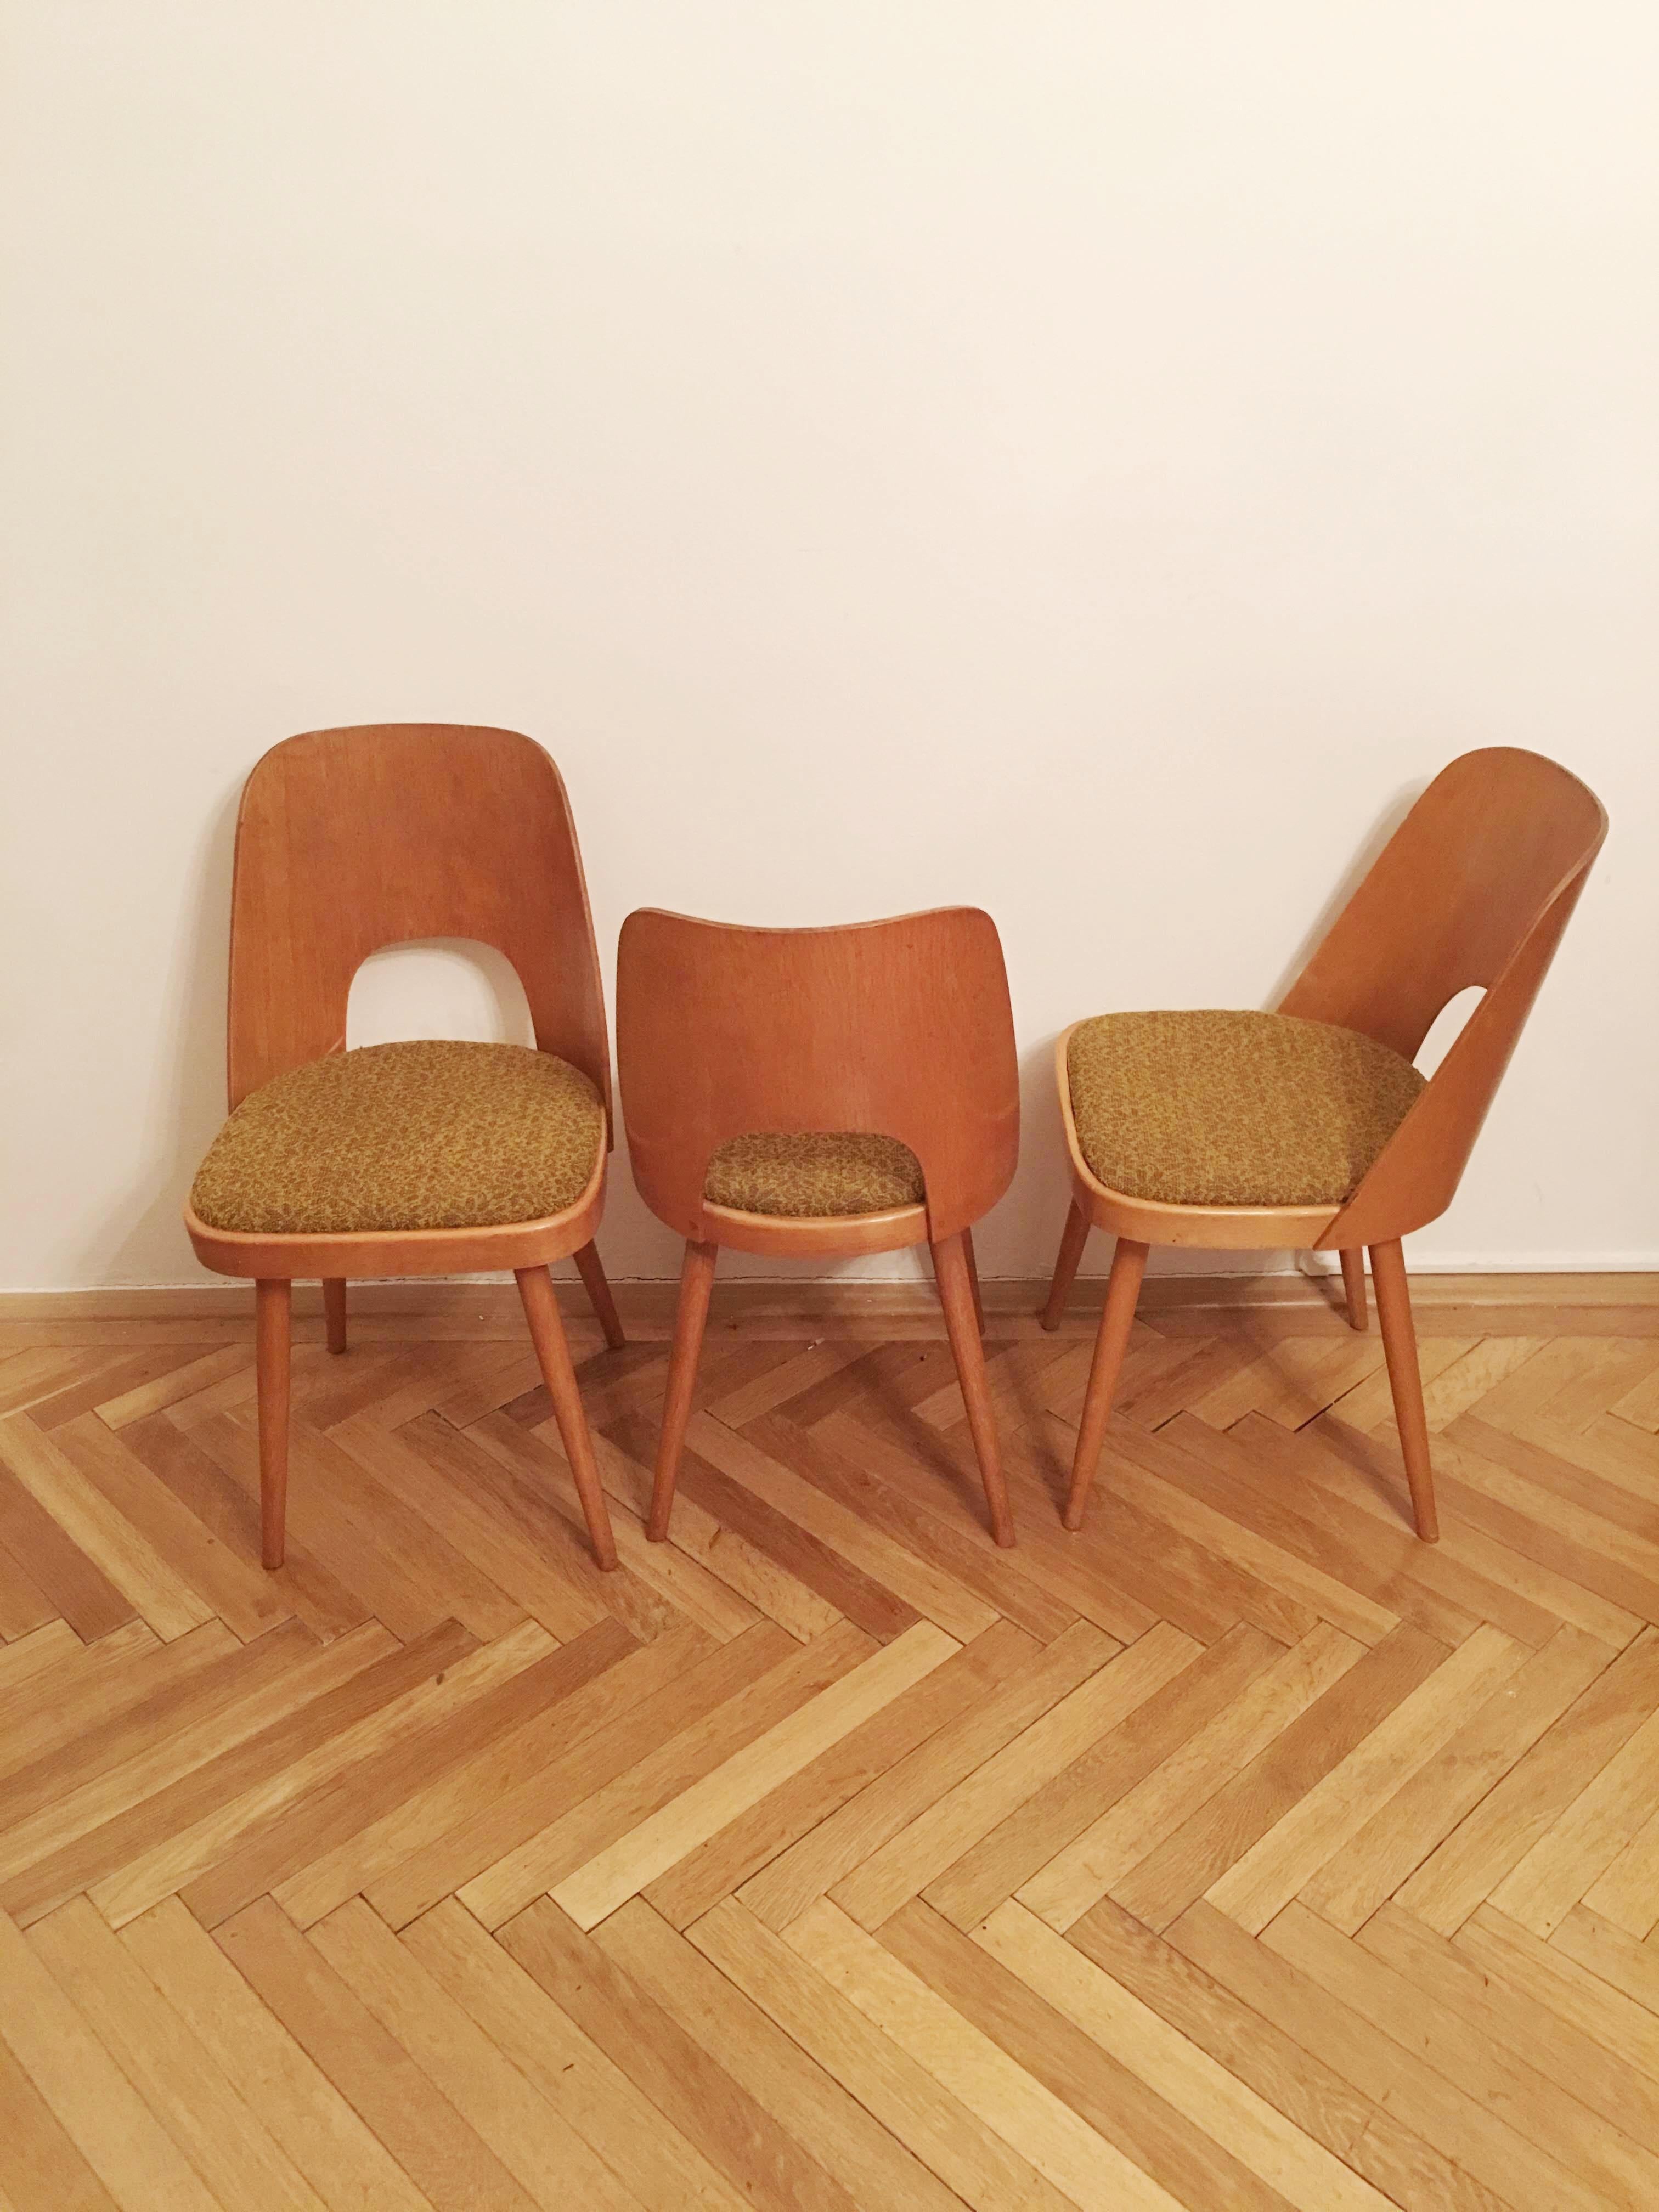 TON retro chairs 1950s. Made in Czechoslovakia.
Designer: Oswald Haerdtl.
Measures: H 83 cm x W 43 cm x D 51 cm.